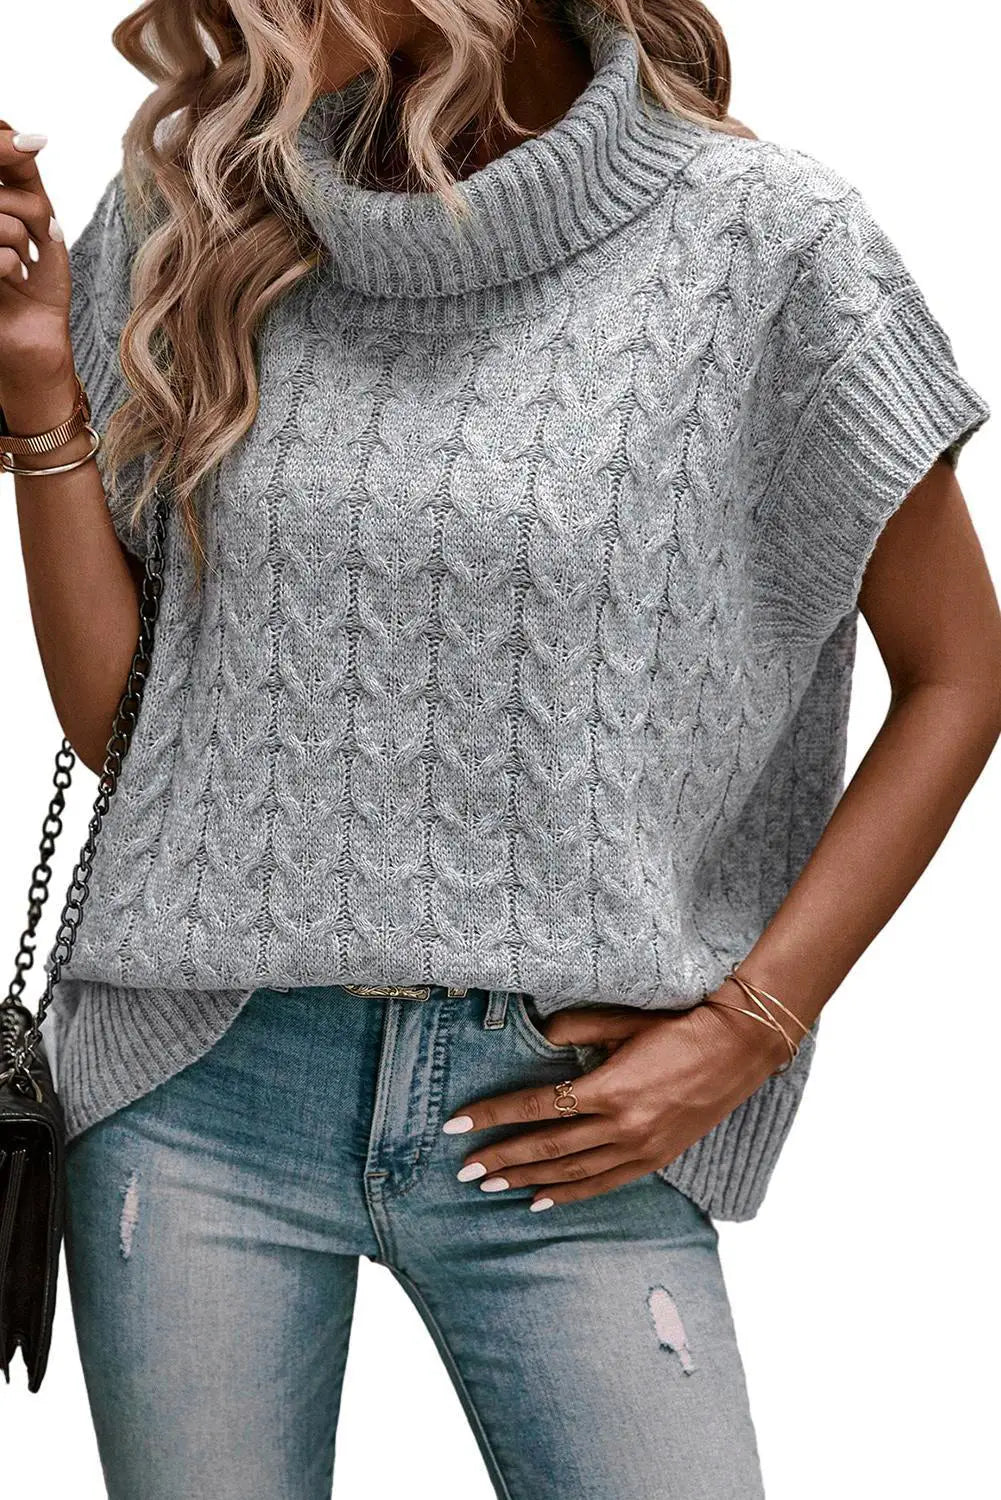 Medium grey cable knit turtleneck batwing sleeve sweater -